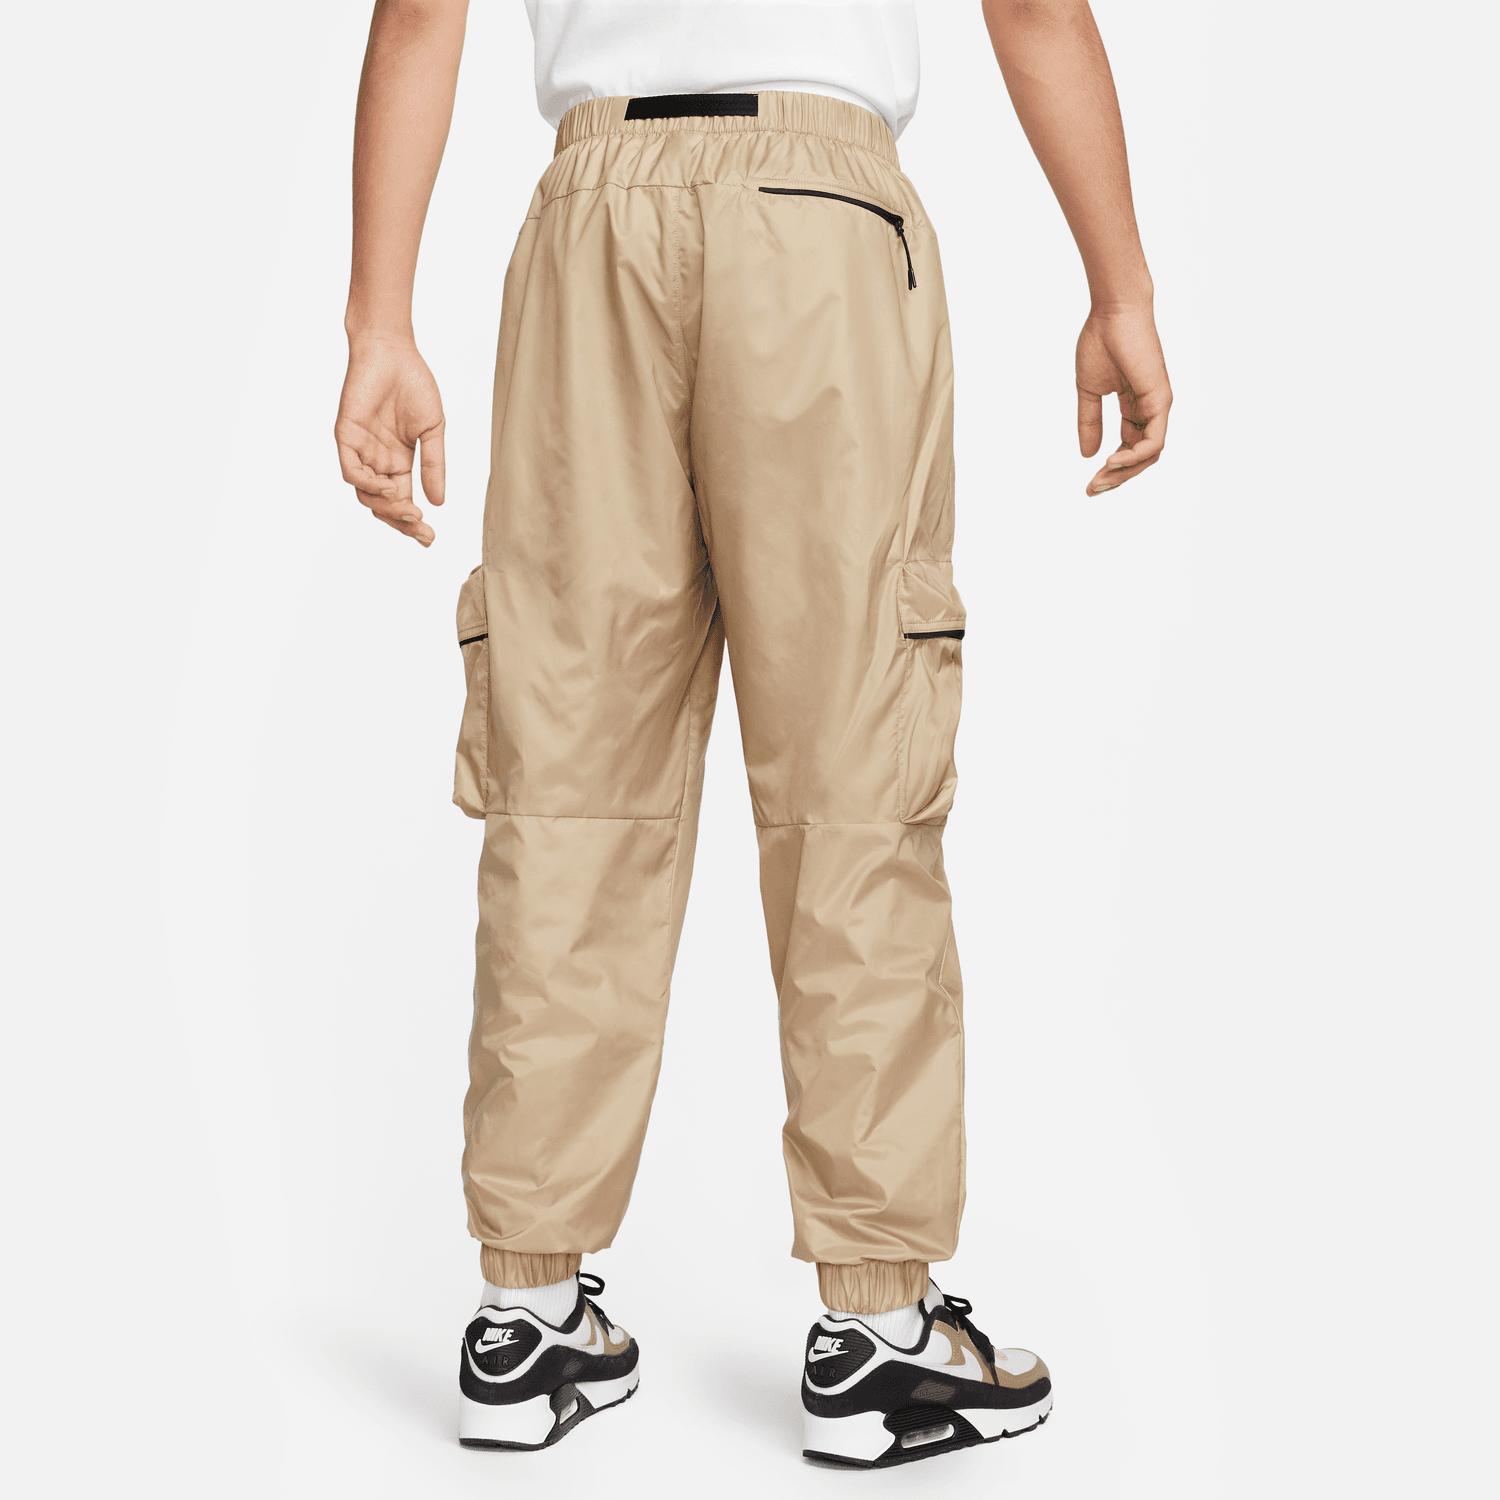 Pantaloni Nike Tech - Beige/Nero